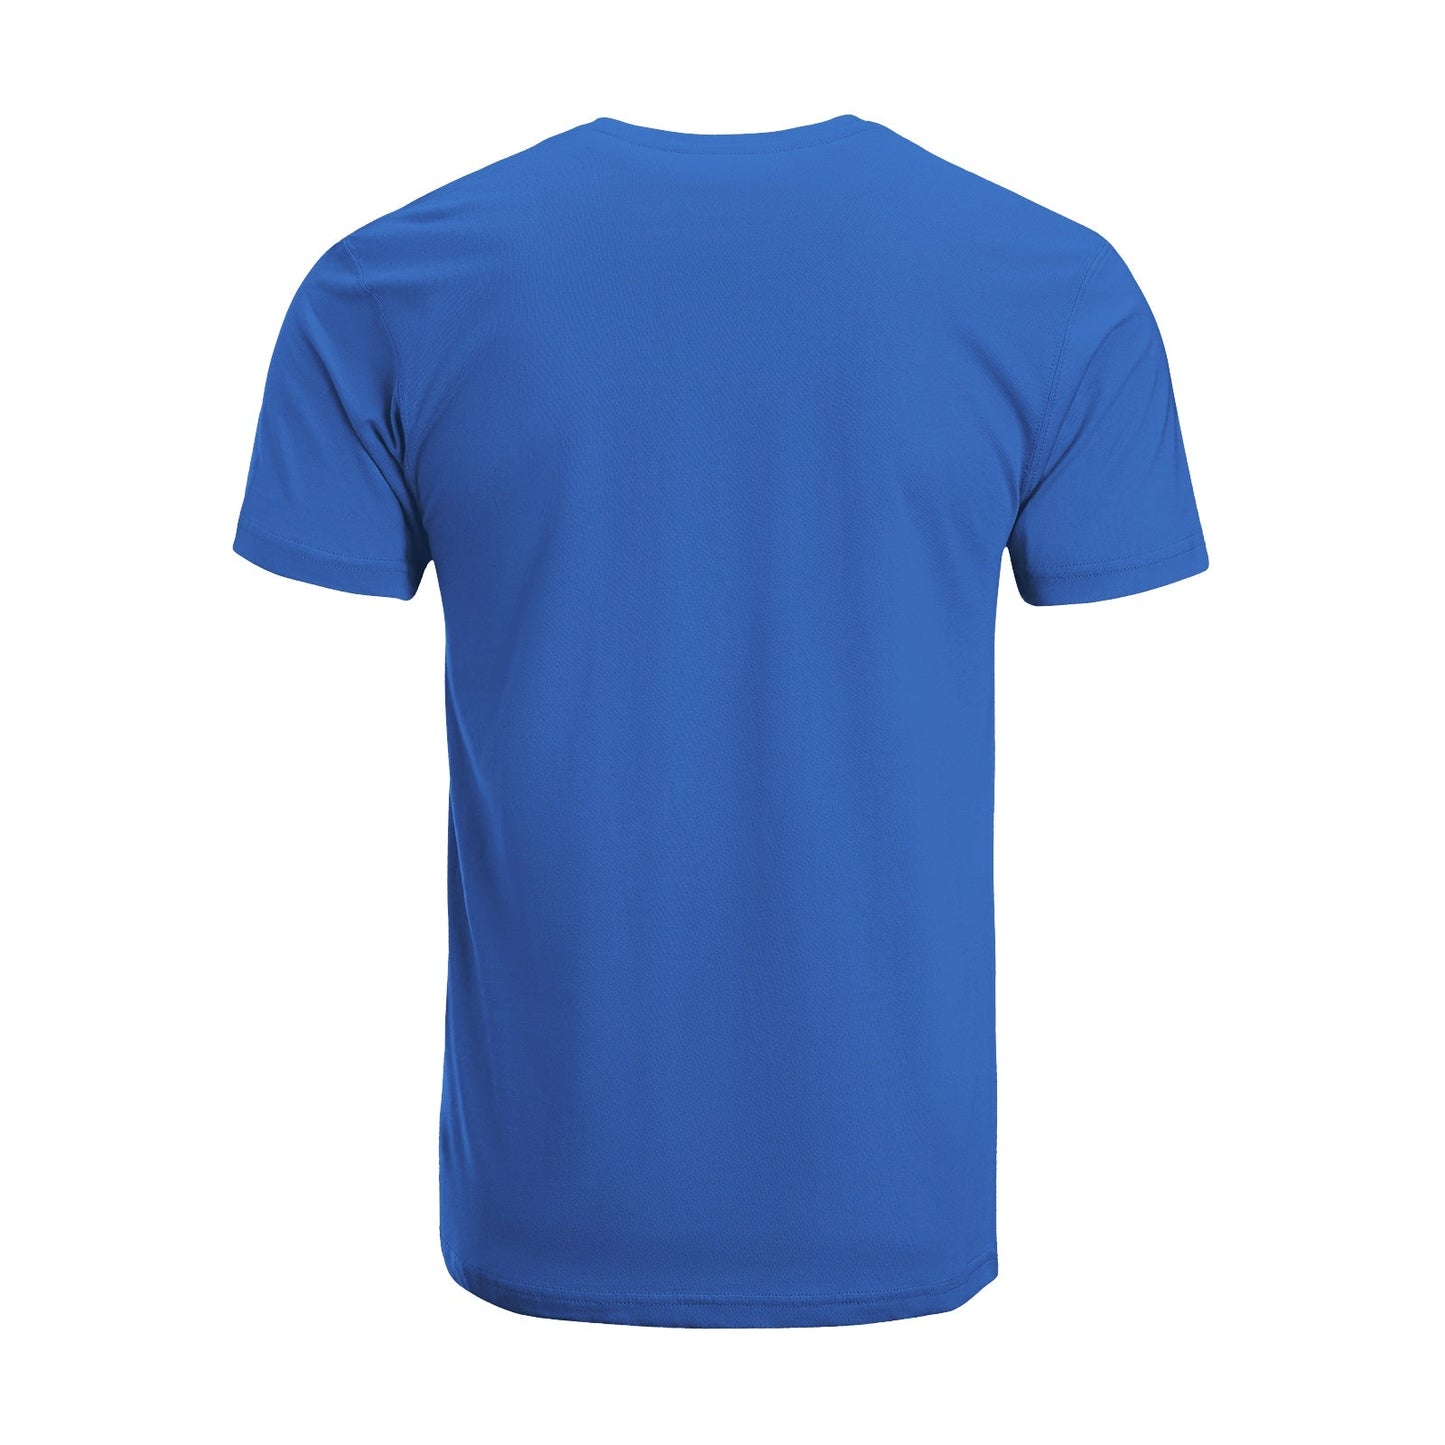 Unisex Short Sleeve Crew Neck Cotton Jersey T-Shirt MOM 48